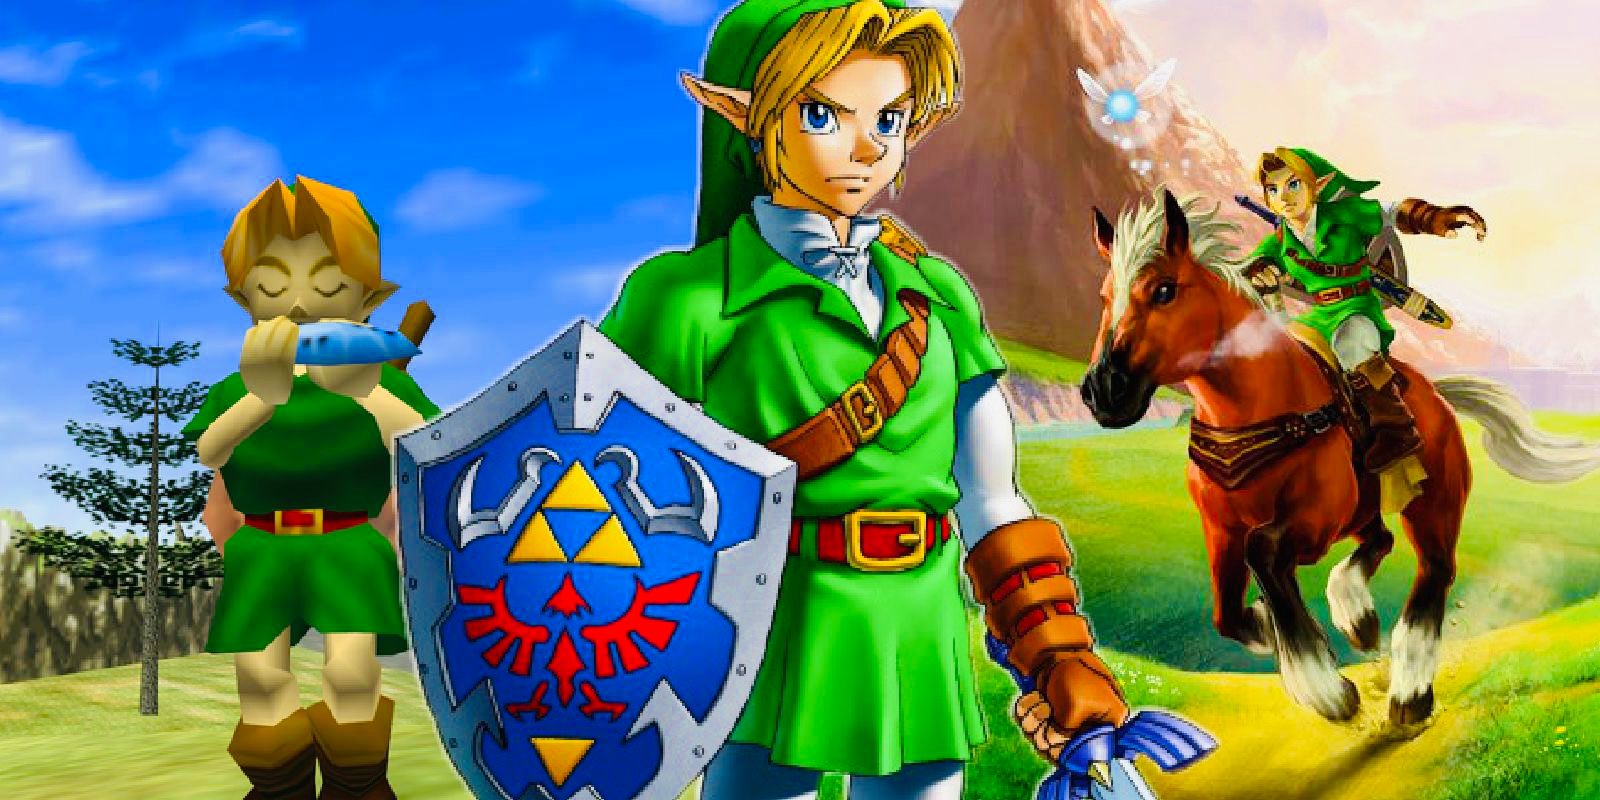  Games - The Legend of Zelda: Ocarina of Time